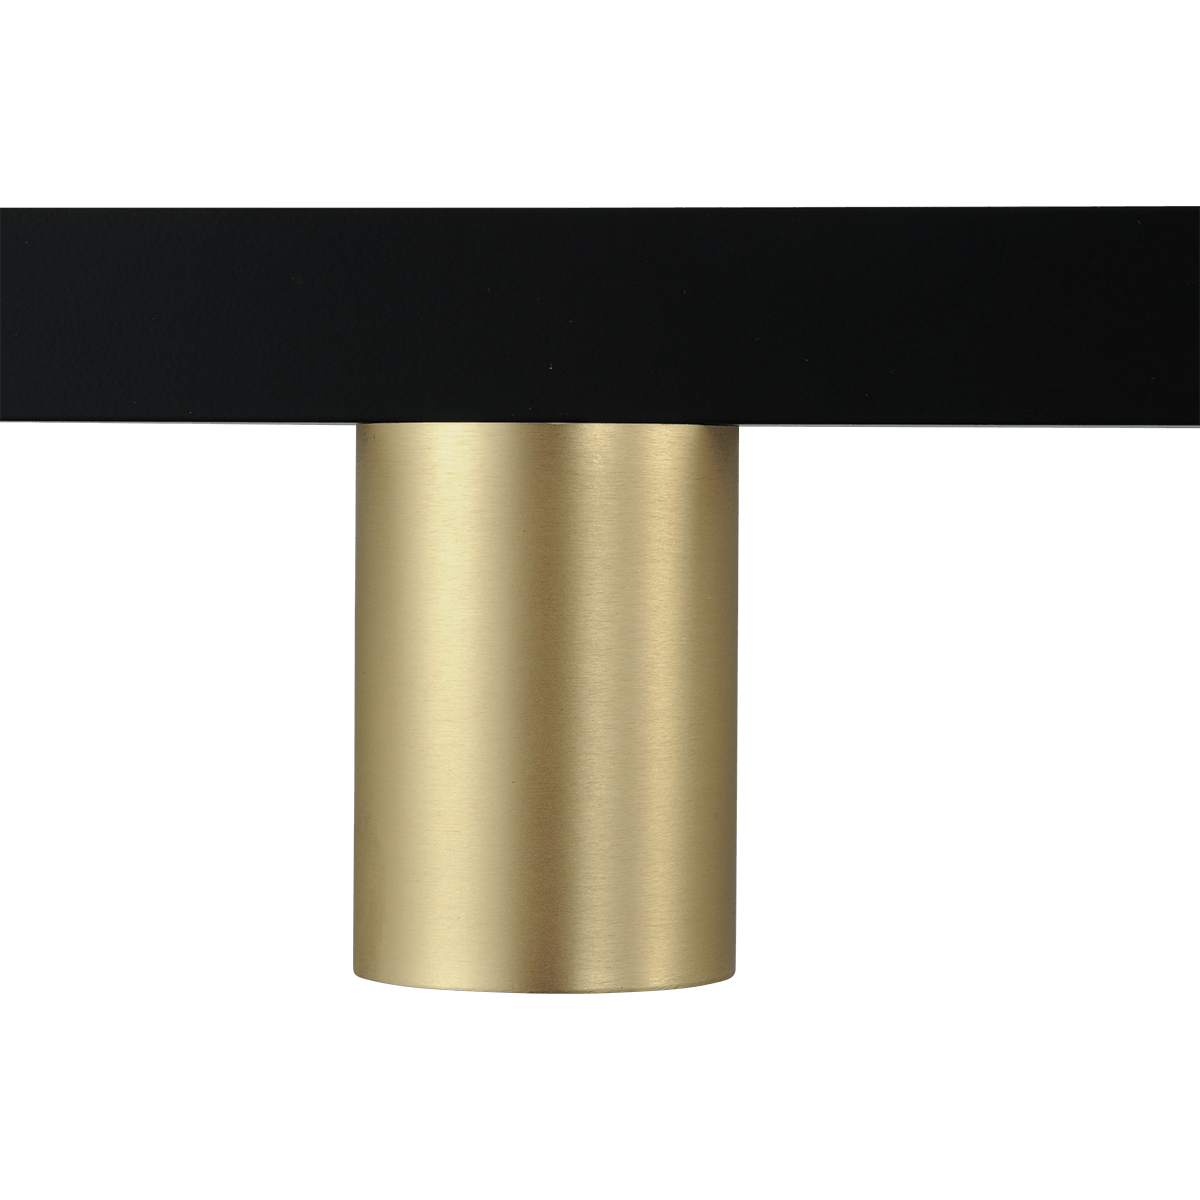 Hanglamp Bounce zwart/mat goud 6-lichts - breedte 160cm - exclusief 6x GU10 - MASTERLIGHT